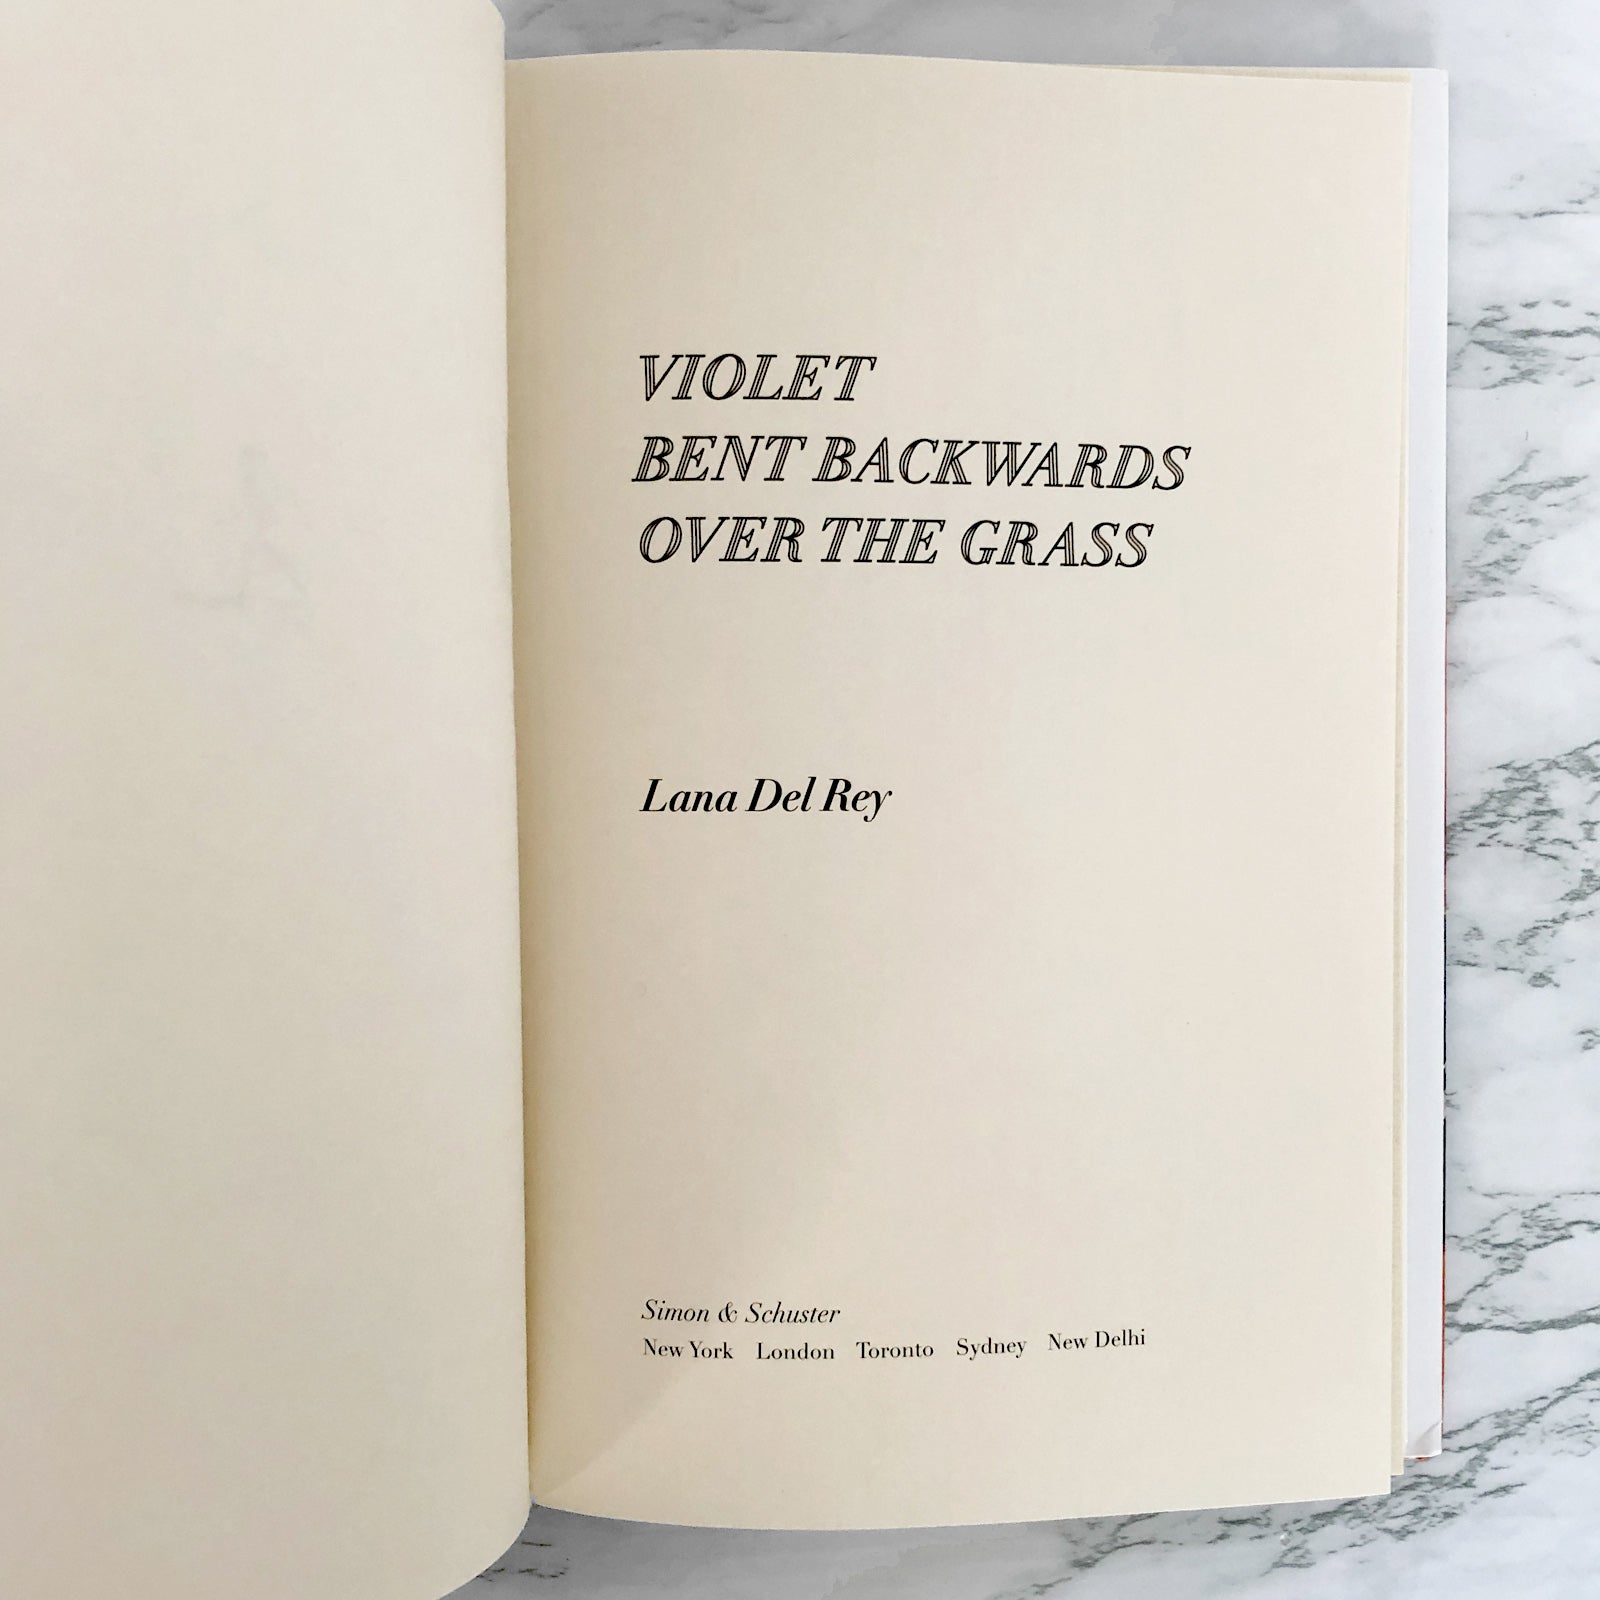 Violet Bent Backwards Over the Grass by Lana Del Rey